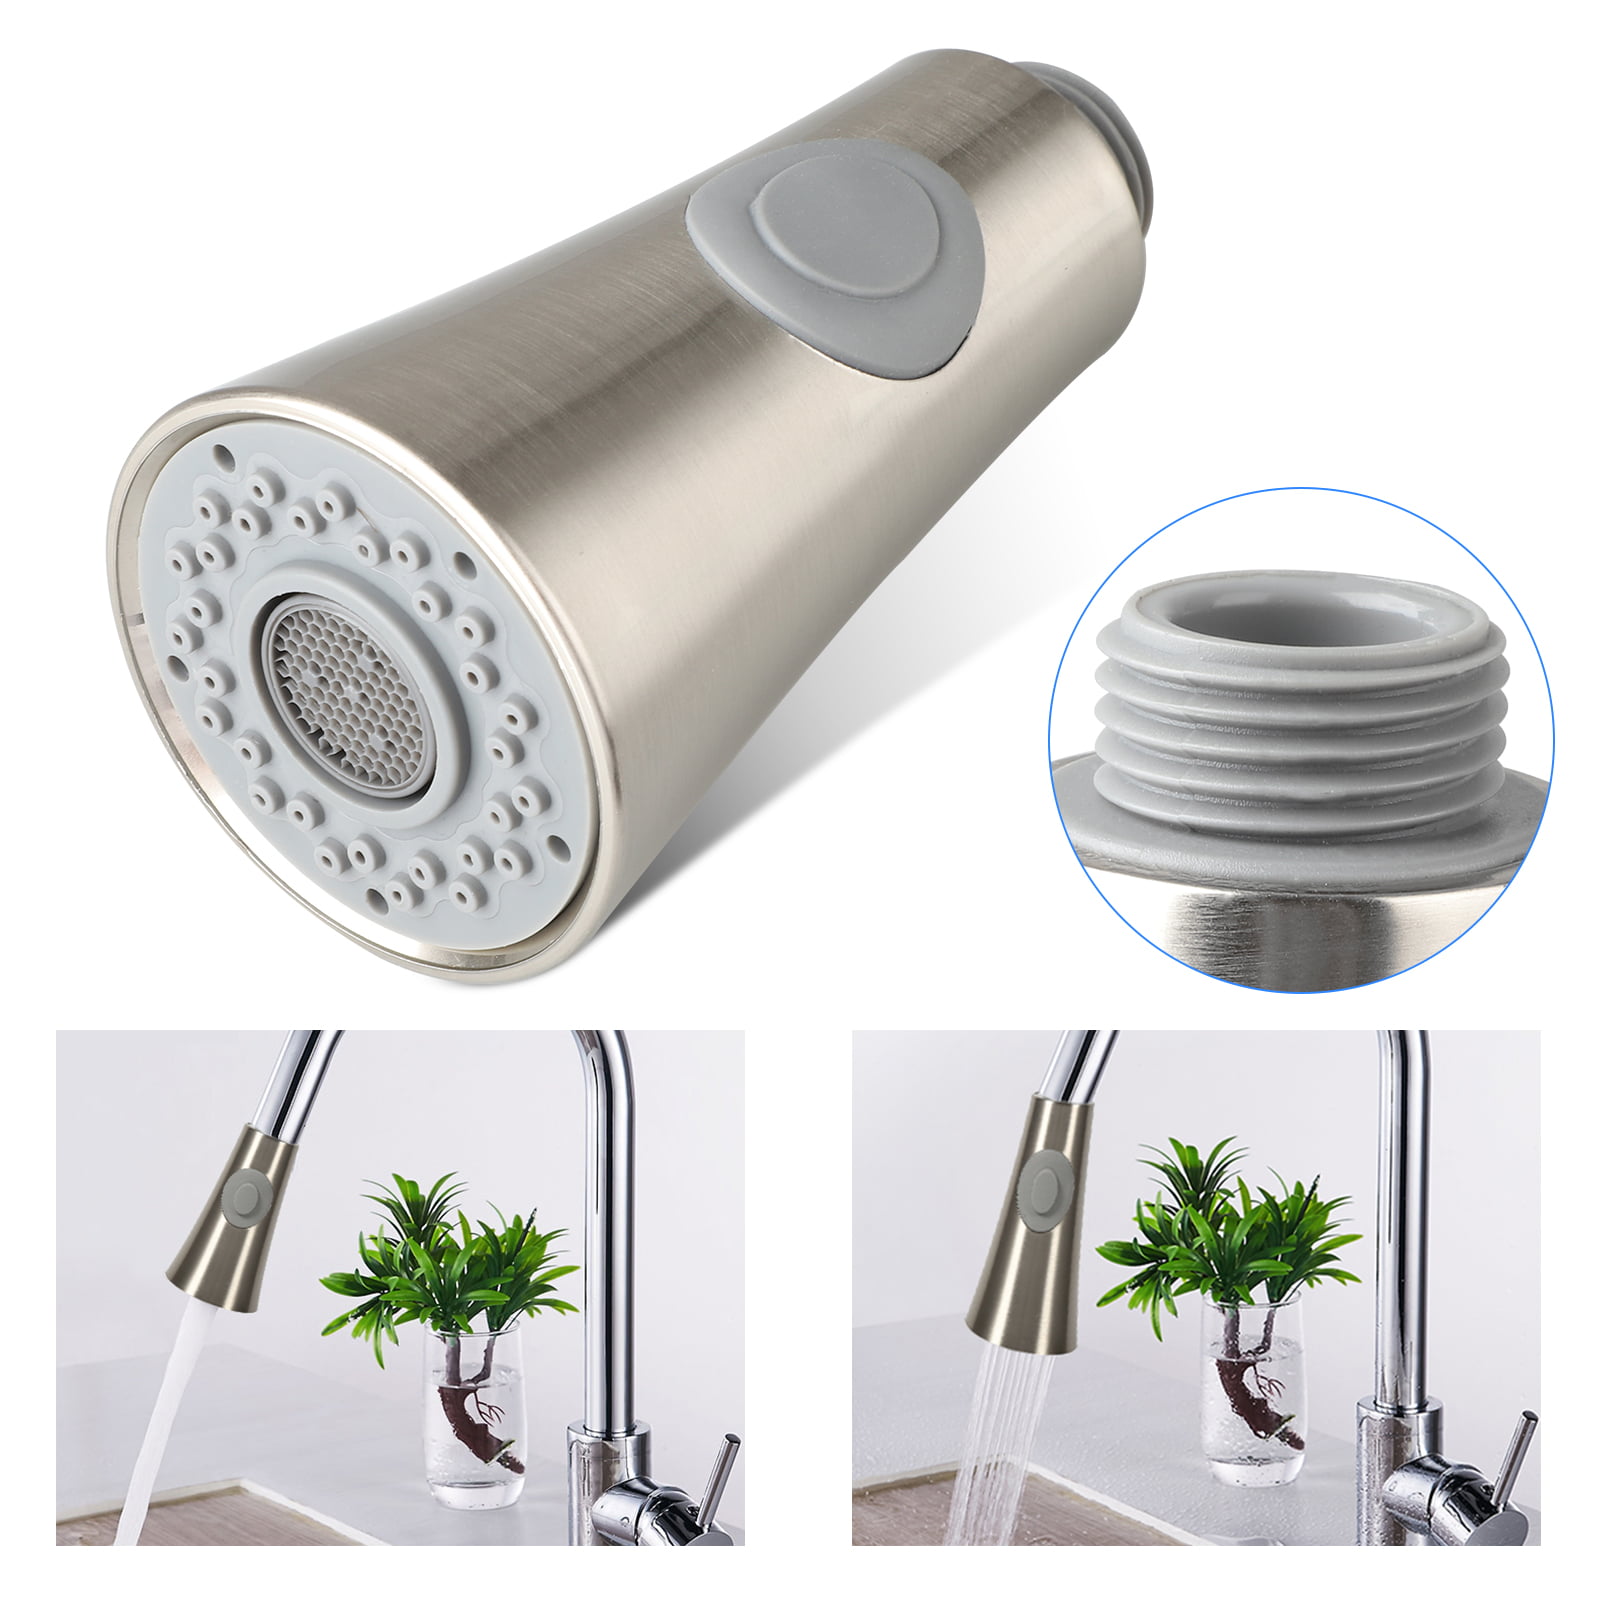 "Pull Down Faucet Head Kitchen Sink Sprayer Nozzle Replacement Tap Spout Bronze